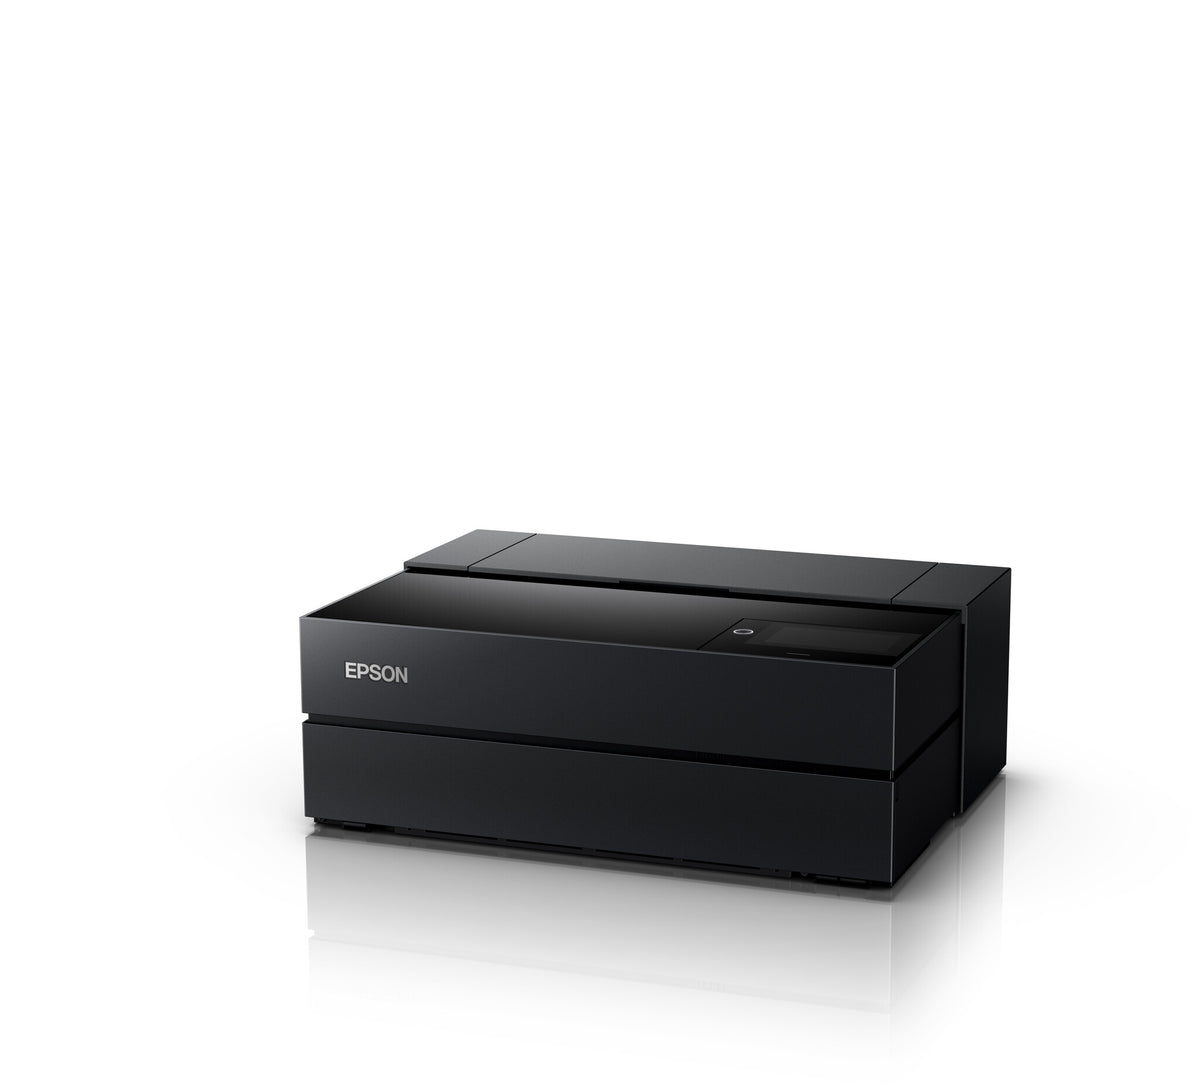 Epson SureColor SC-P700 - Wi-Fi Inkjet Photo Printer